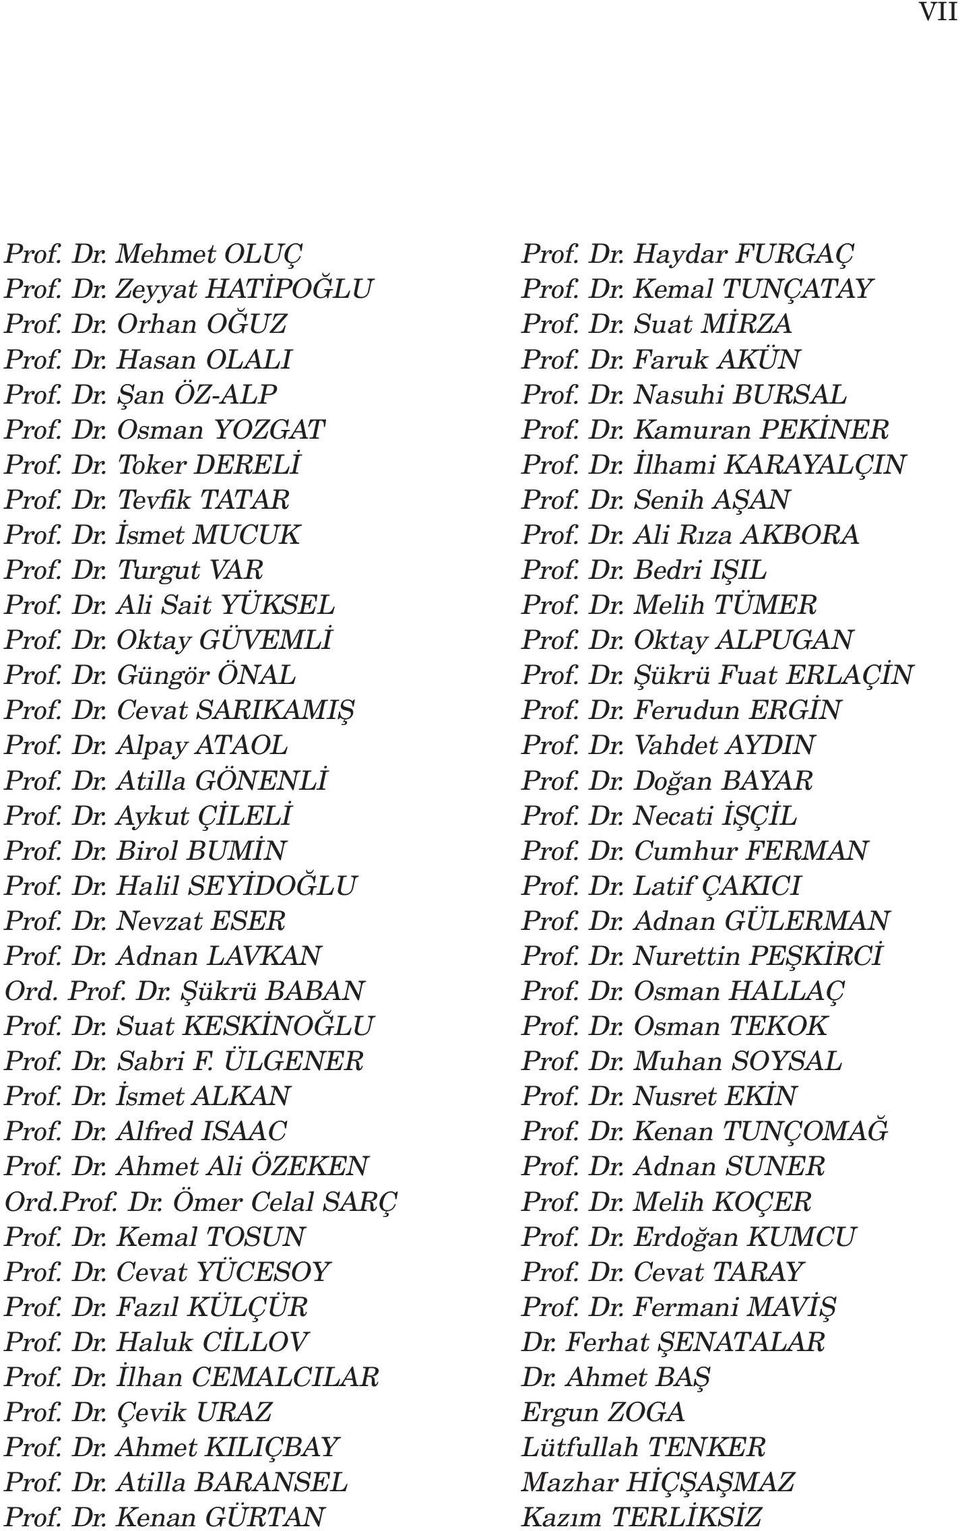 Dr. Halil SEY DO LU Prof. Dr. Nevzat ESER Prof. Dr. Adnan LAVKAN Ord. Prof. Dr. fiükrü BABAN Prof. Dr. Suat KESK NO LU Prof. Dr. Sabri F. ÜLGENER Prof. Dr. smet ALKAN Prof. Dr. Alfred ISAAC Prof. Dr. Ahmet Ali ÖZEKEN Ord.